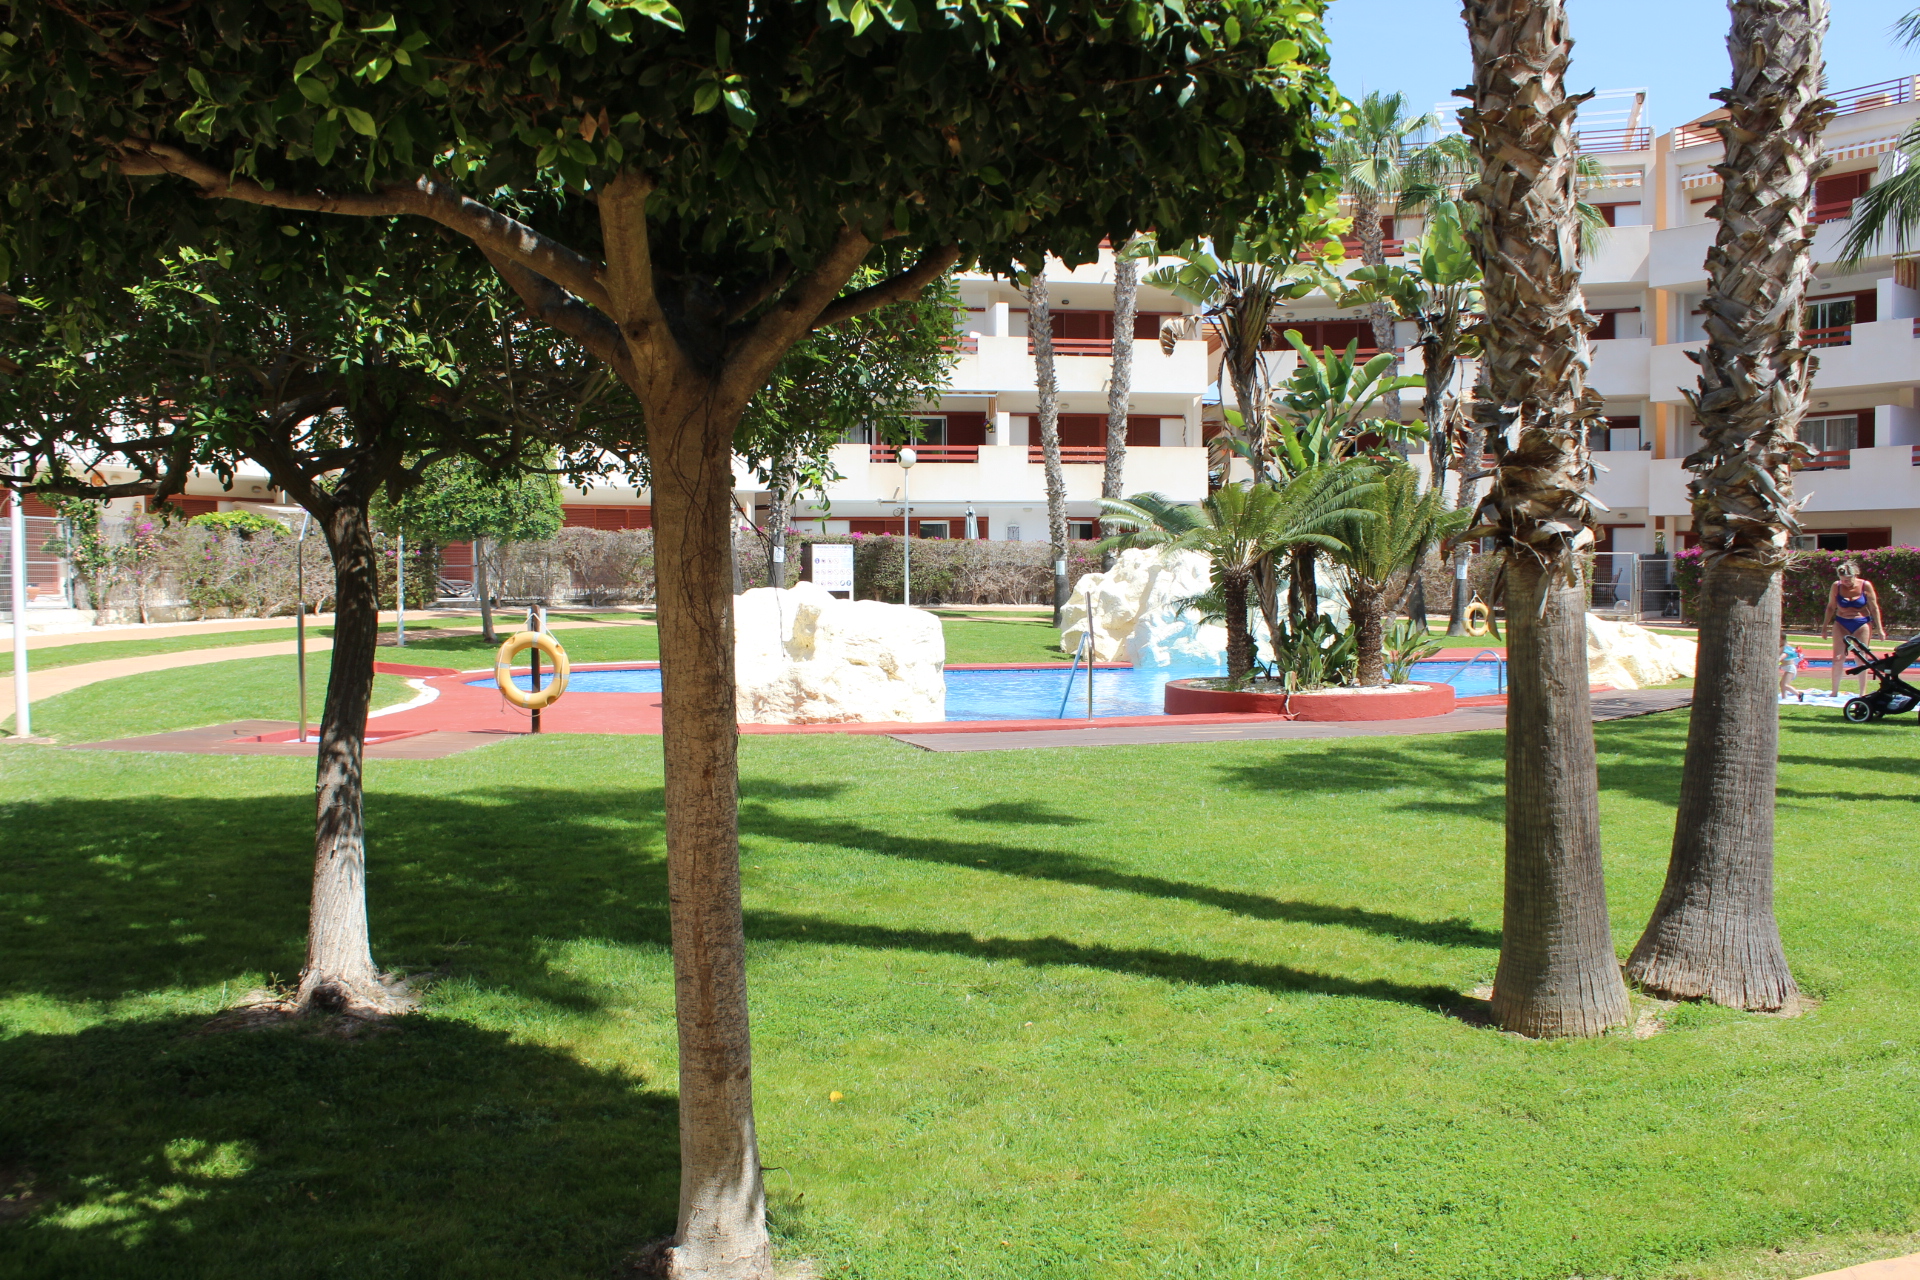 Rent this apartment in Playa Flamenca in el Rincon at the Orihuela Costa.